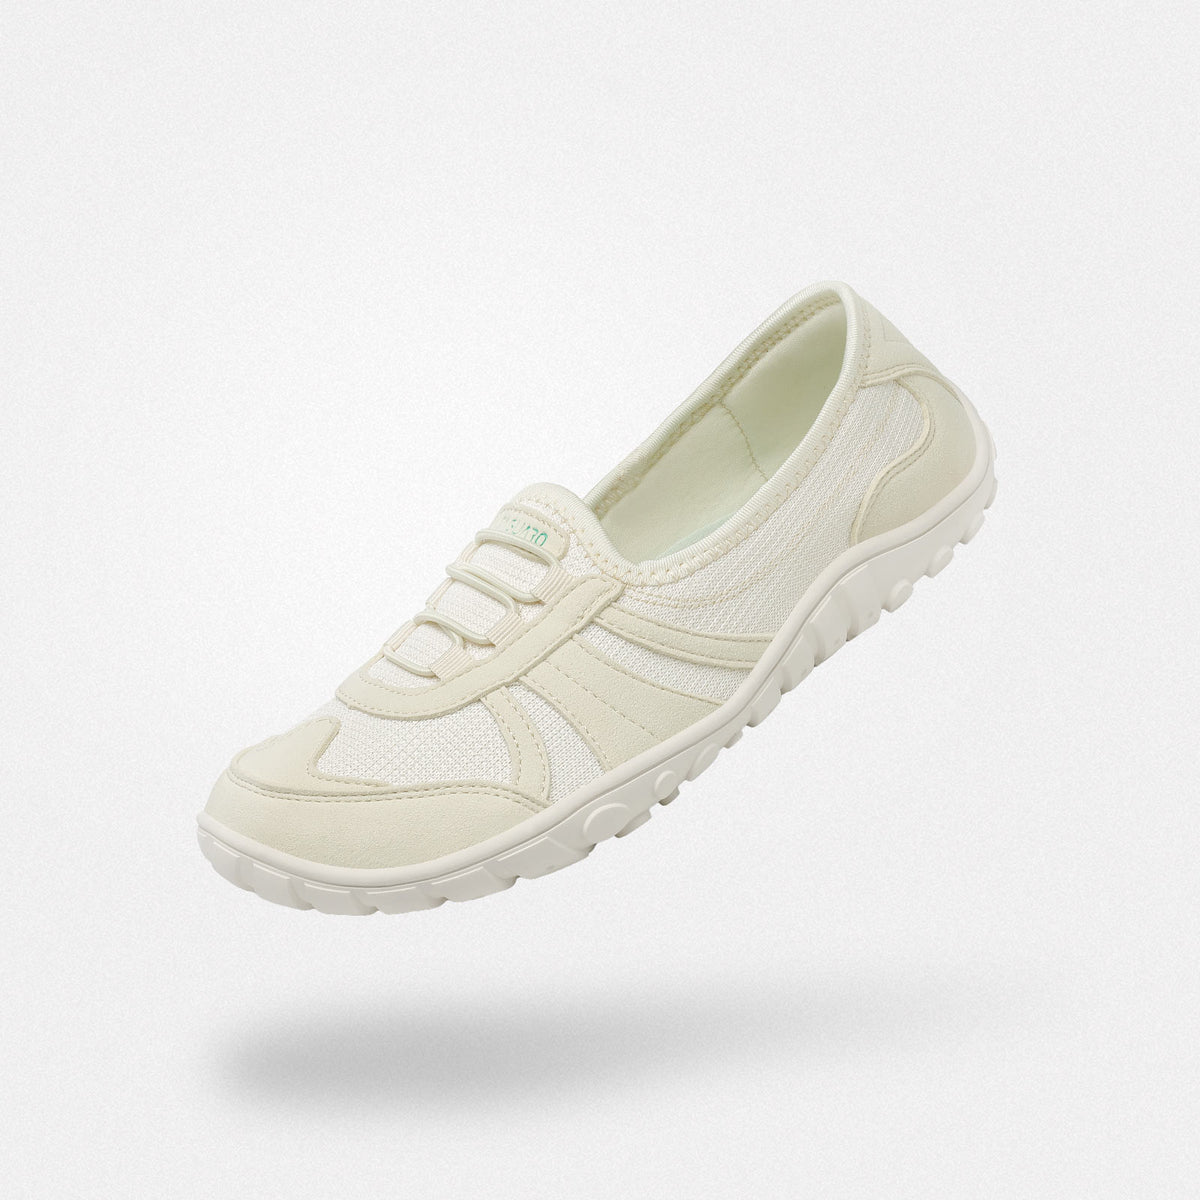 Fern III - Zapatos Barefoot